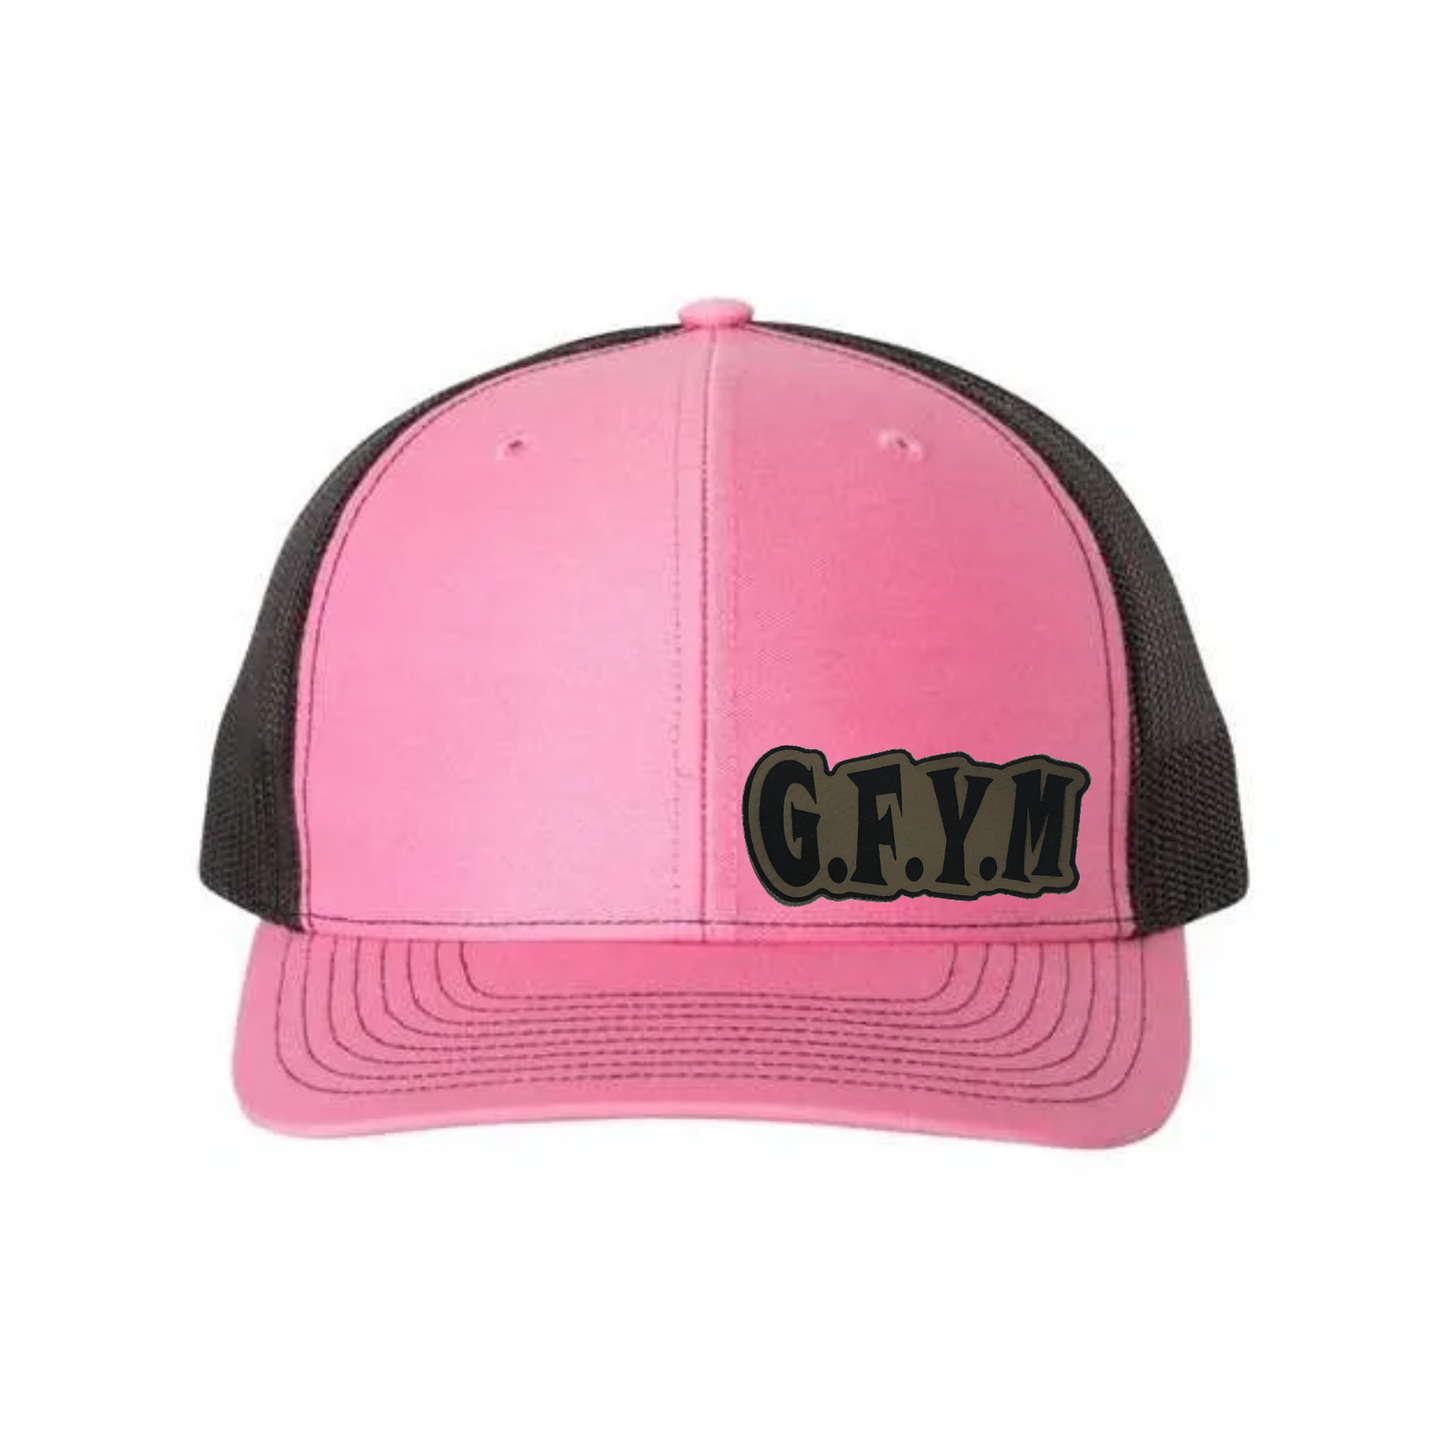 G.F.Y.M Leather Patch Richardson 112 Trucker Hat